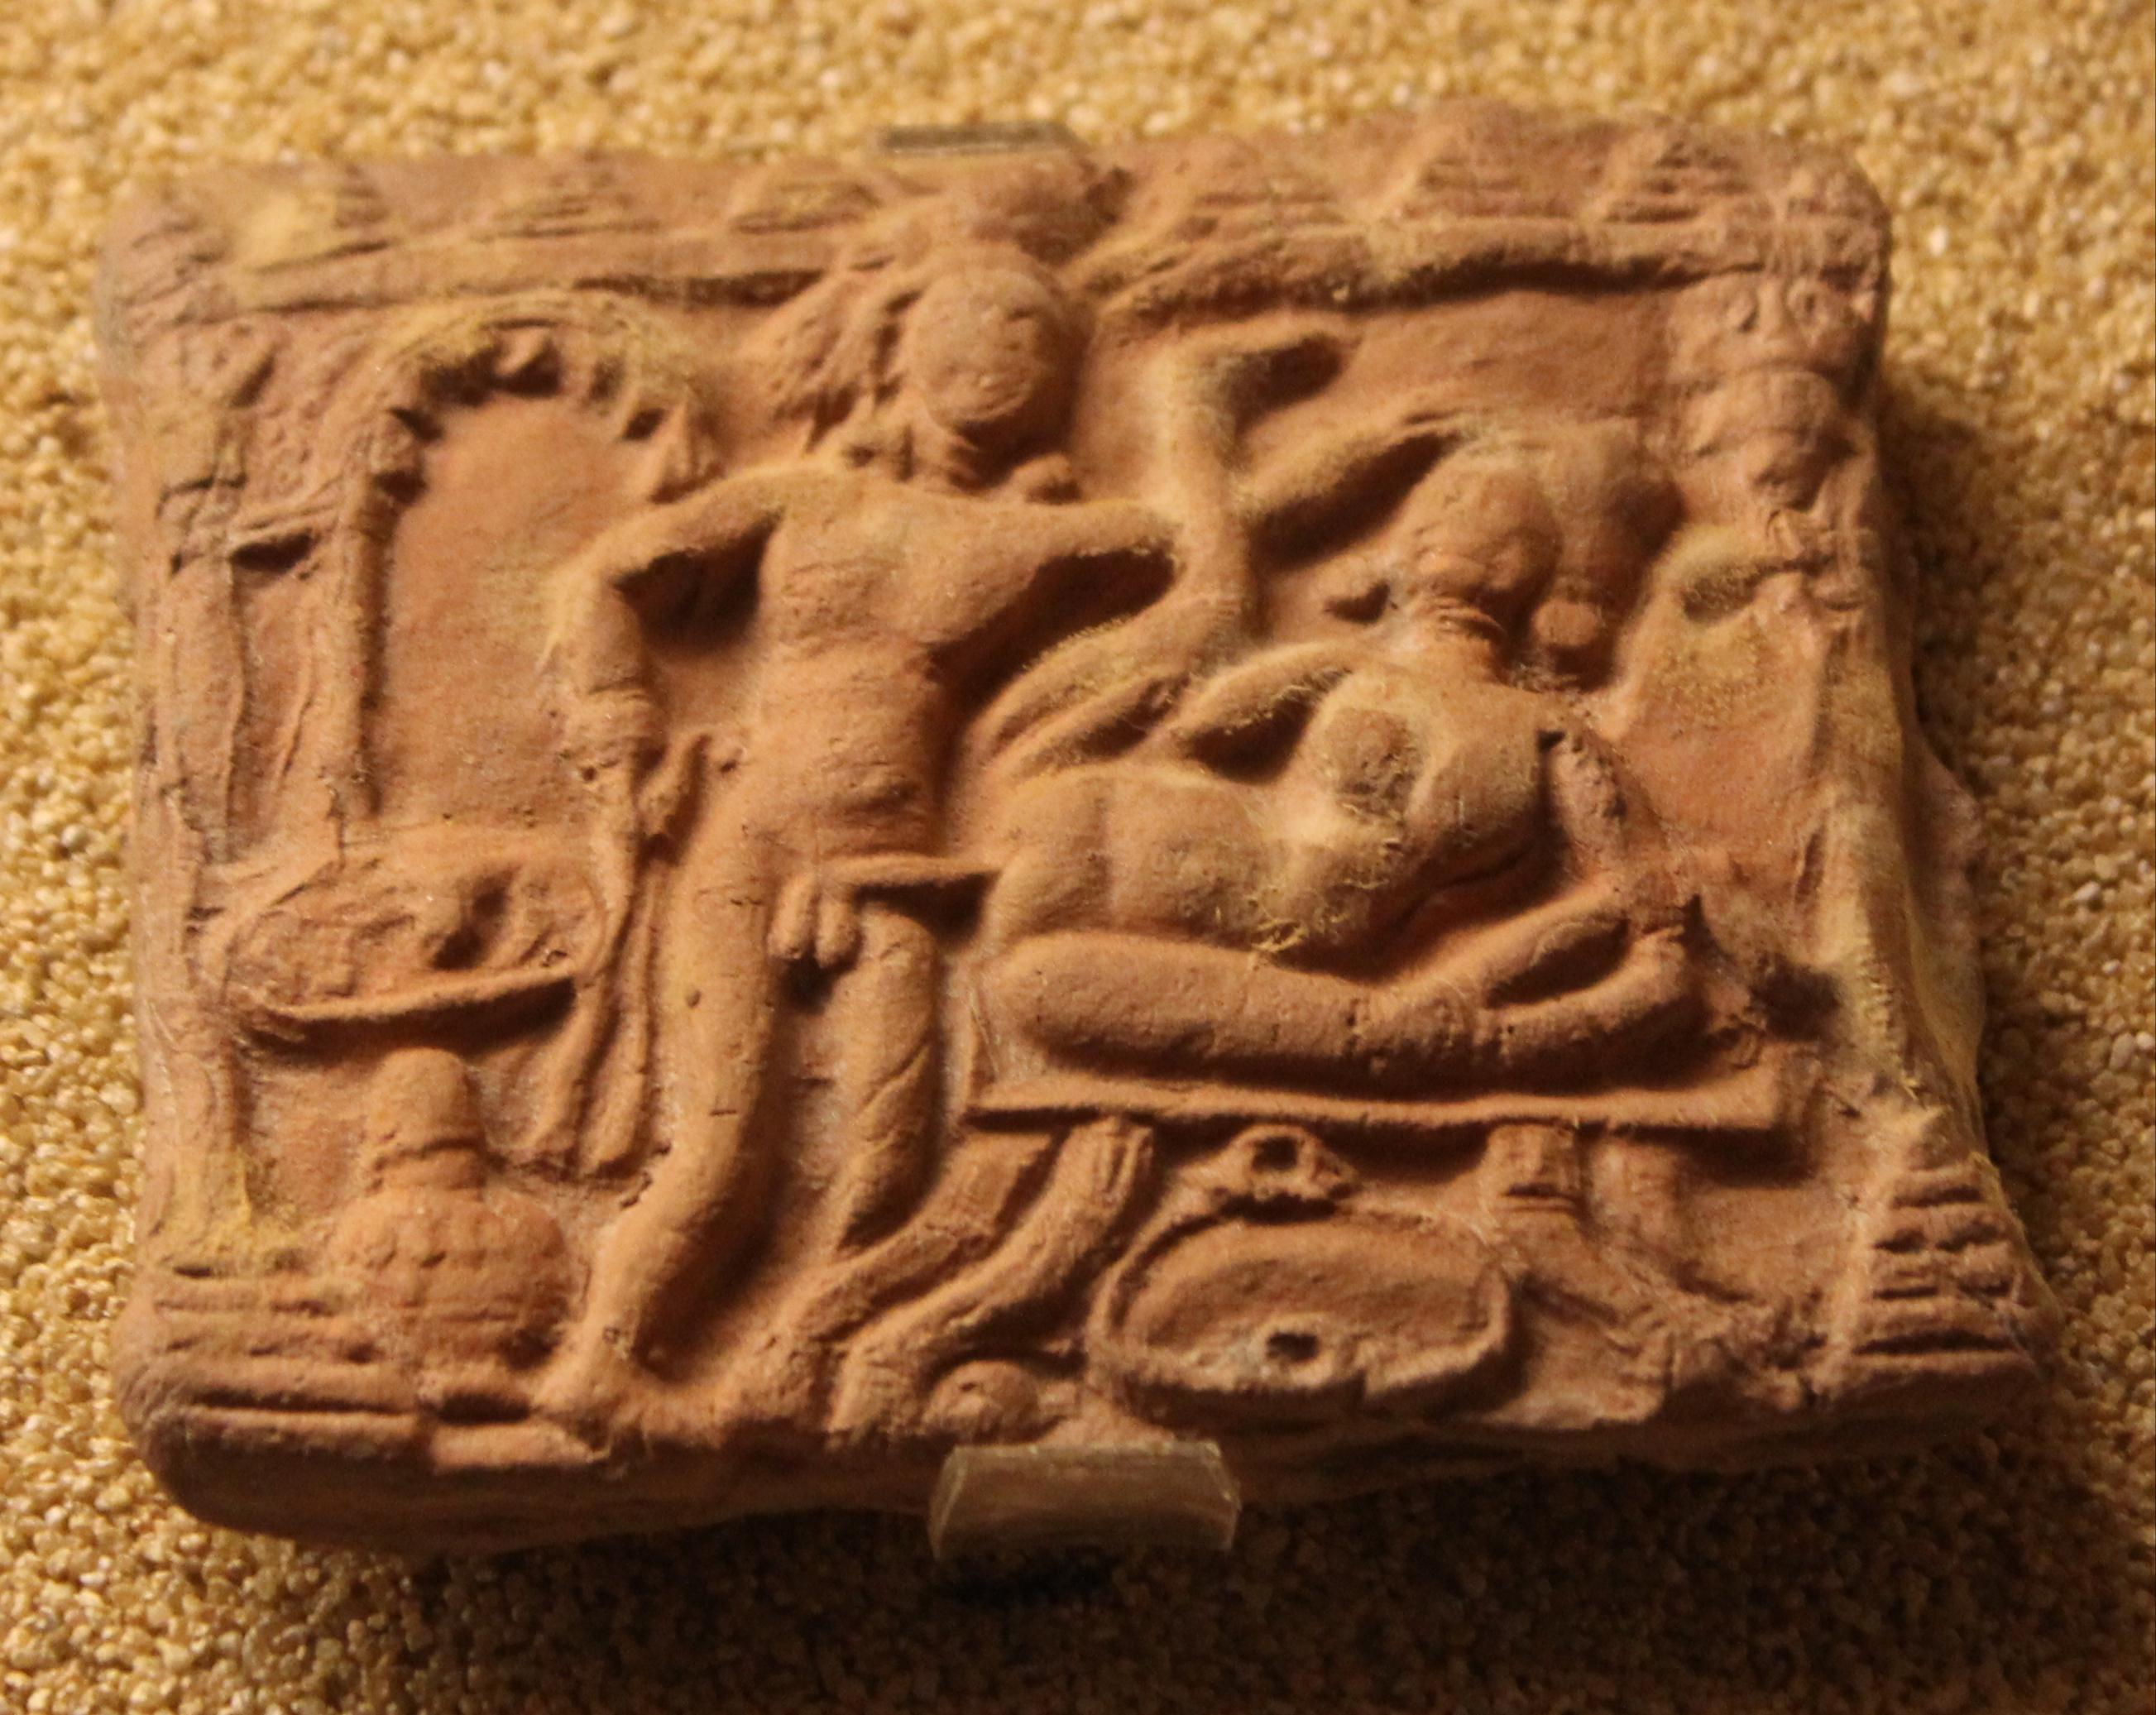 Erotic scene, terracotta, 800-400 BCE, Chandraketugarh. Now on display at Chandraketugarh Museum, Kolkata, India.jpg